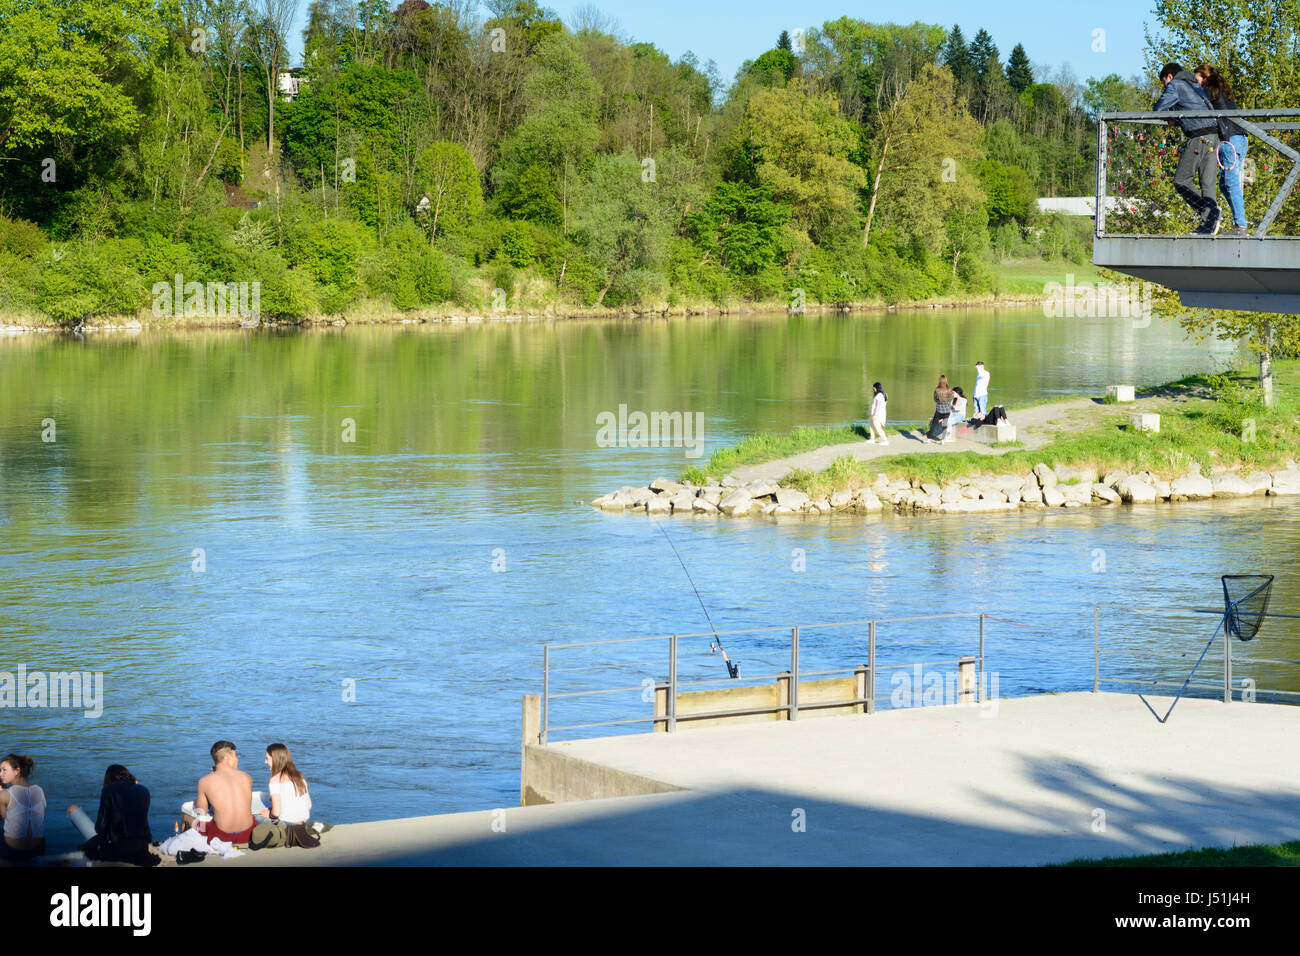 park Mangfallpark, confluence of river Inn and Mangfall, people sunbathing, Rosenheim, Oberbayern, Upper Bavaria, Bayern, Bavaria, Germany Stock Photo